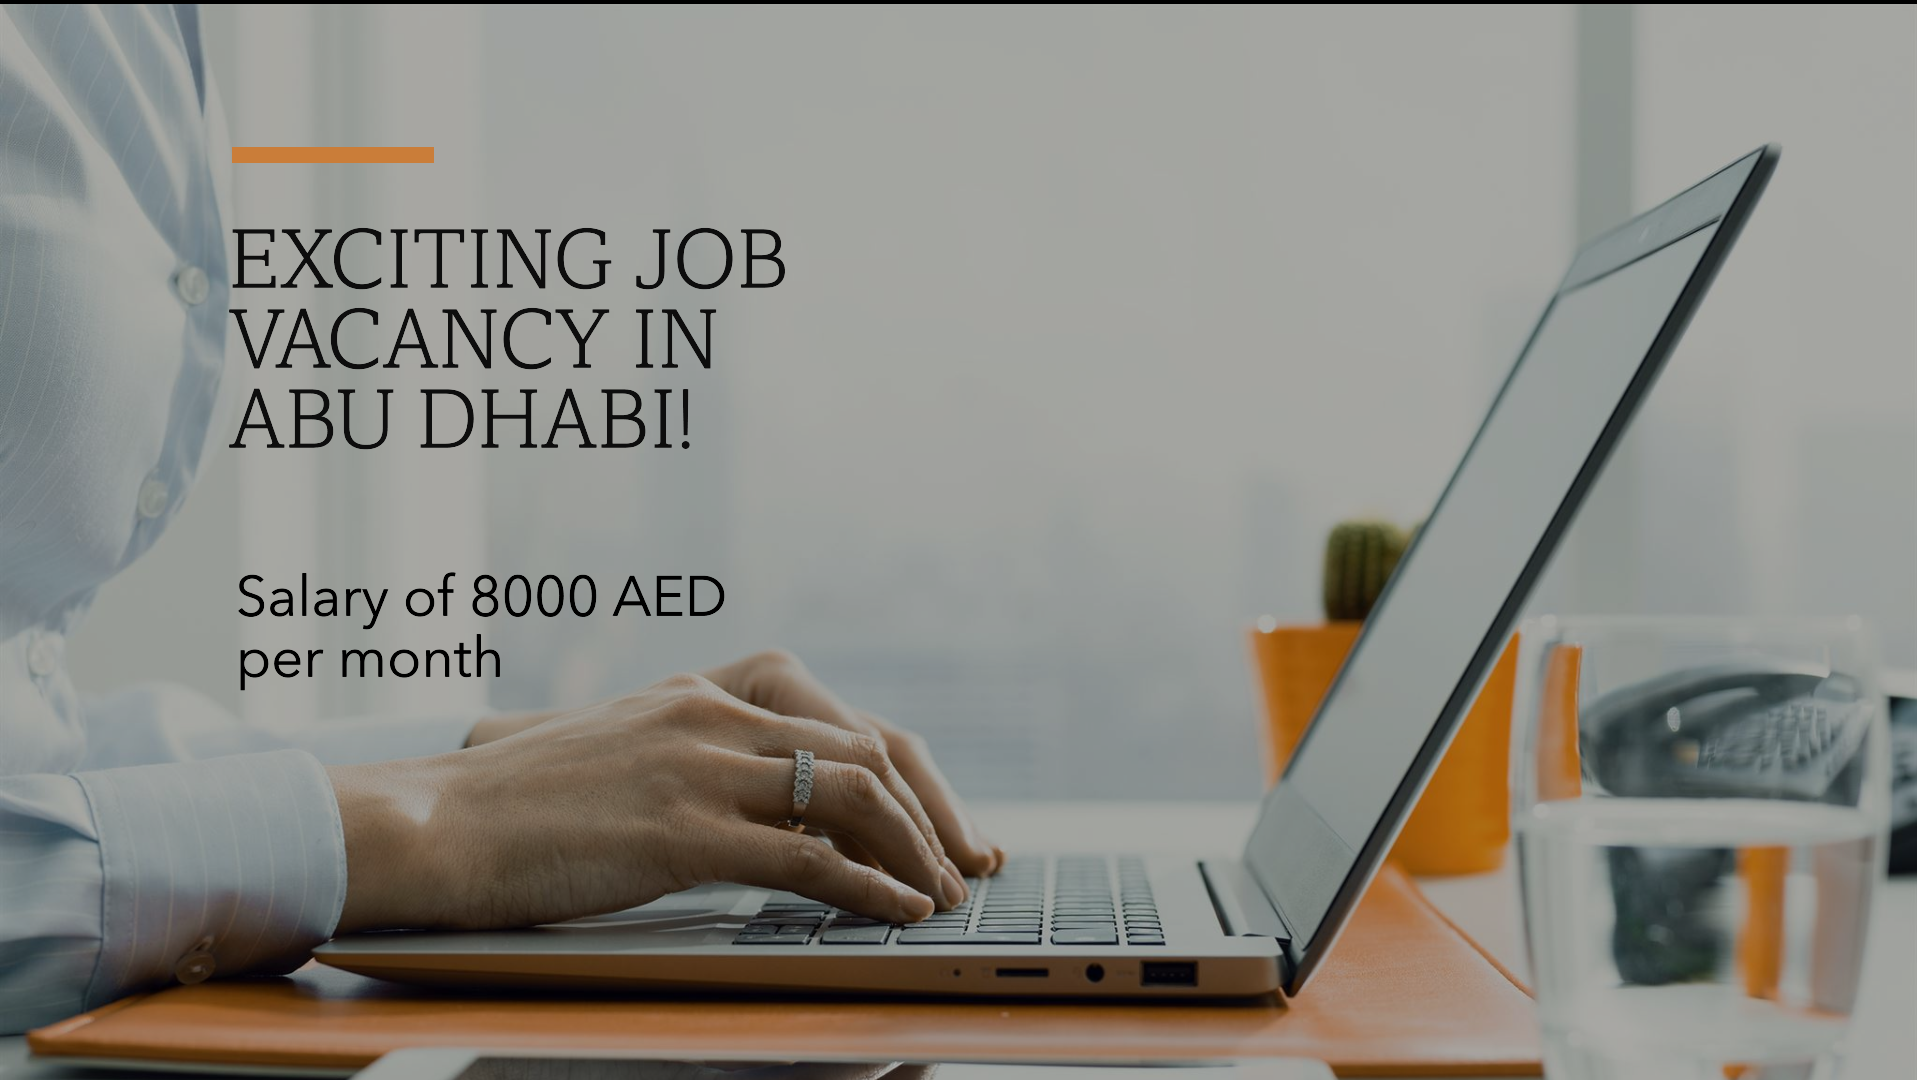 abu dhabi job vacancy today with salary 8000 AED